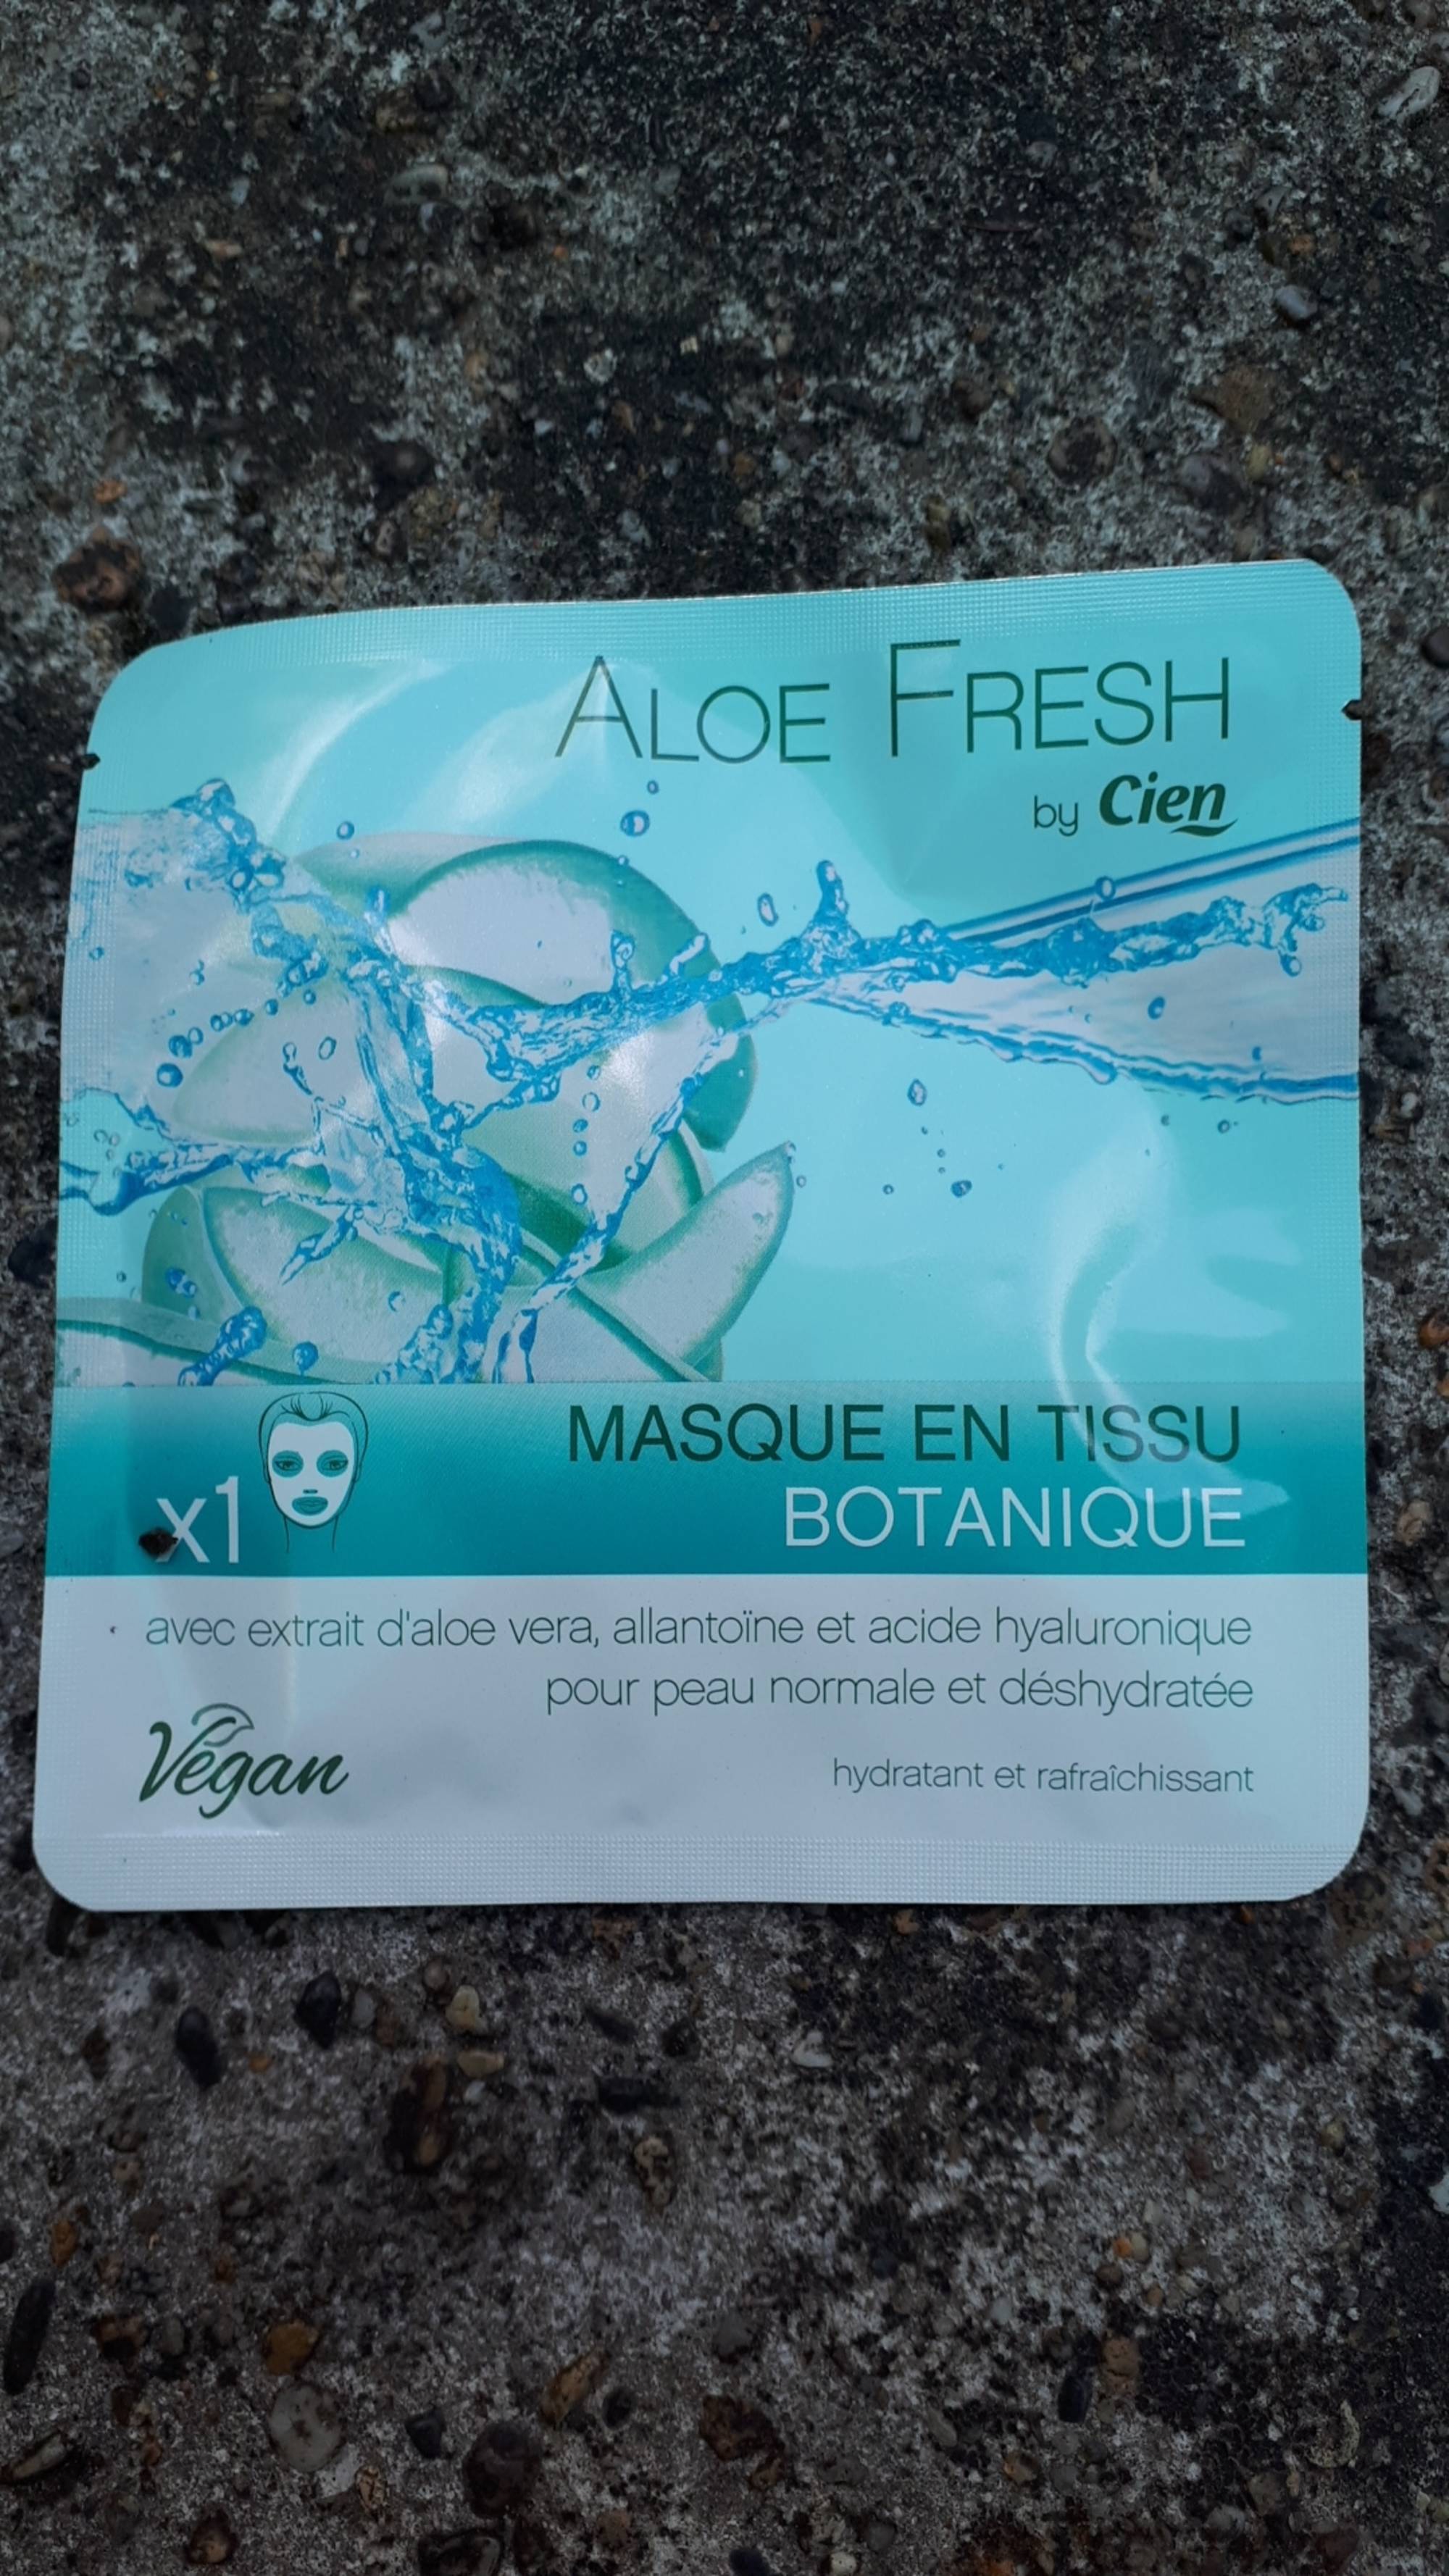 CIEN - Aloe fresh - Masque en tissu botanique